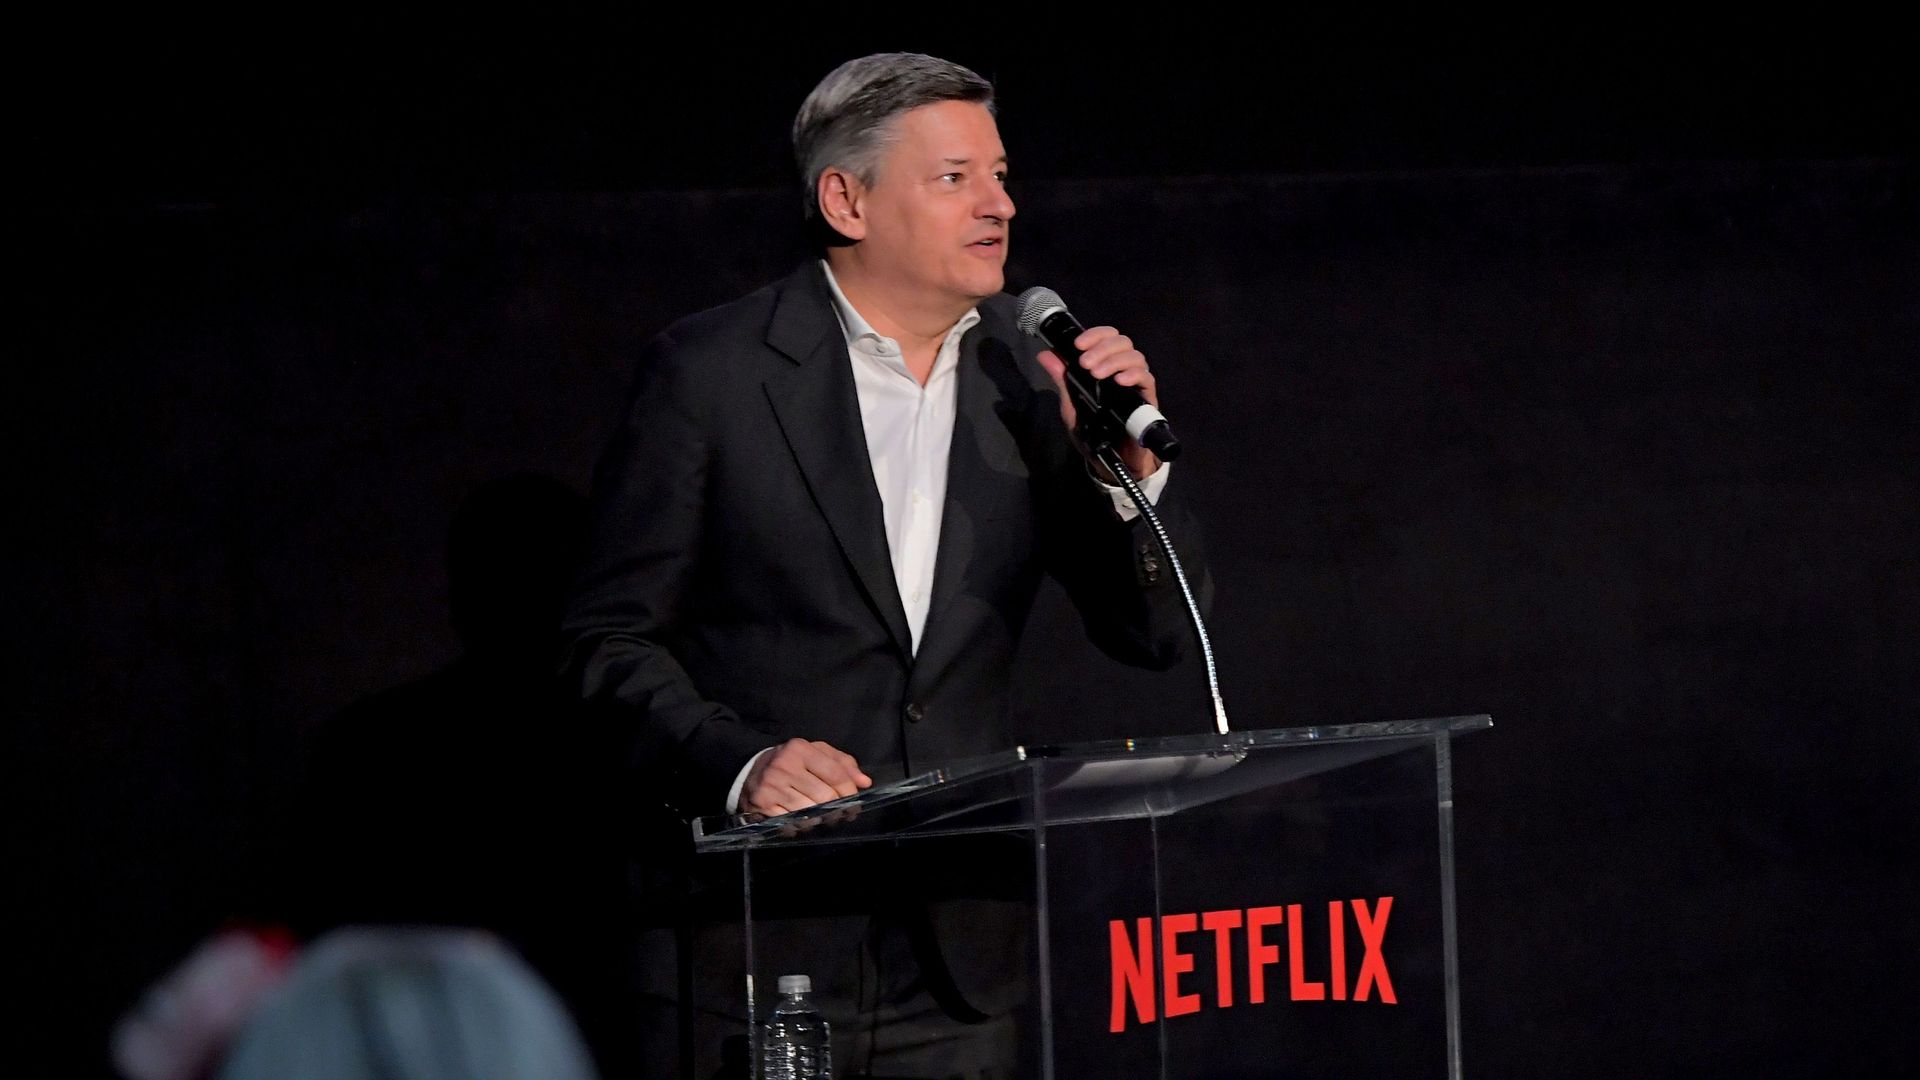 Photo of Netflix chief of content Ted Sarandos at a podium